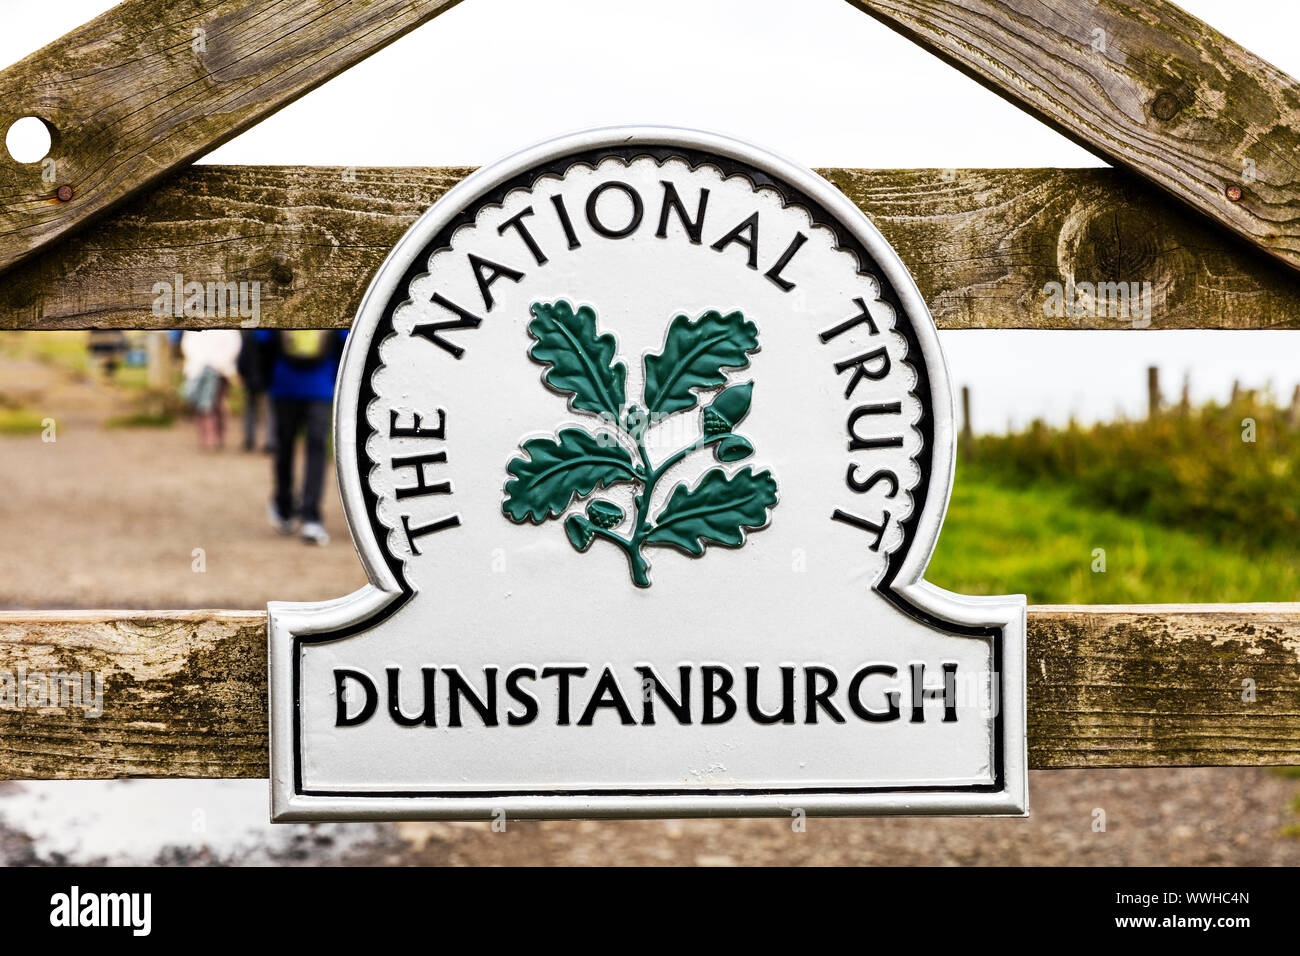 Dunstanburgh Castle anmelden, Northumberland, Großbritannien, England, der National Trust, dem National Trust, dunstanburgh, der National Trust Dunstanburgh, Großbritannien Stockfoto